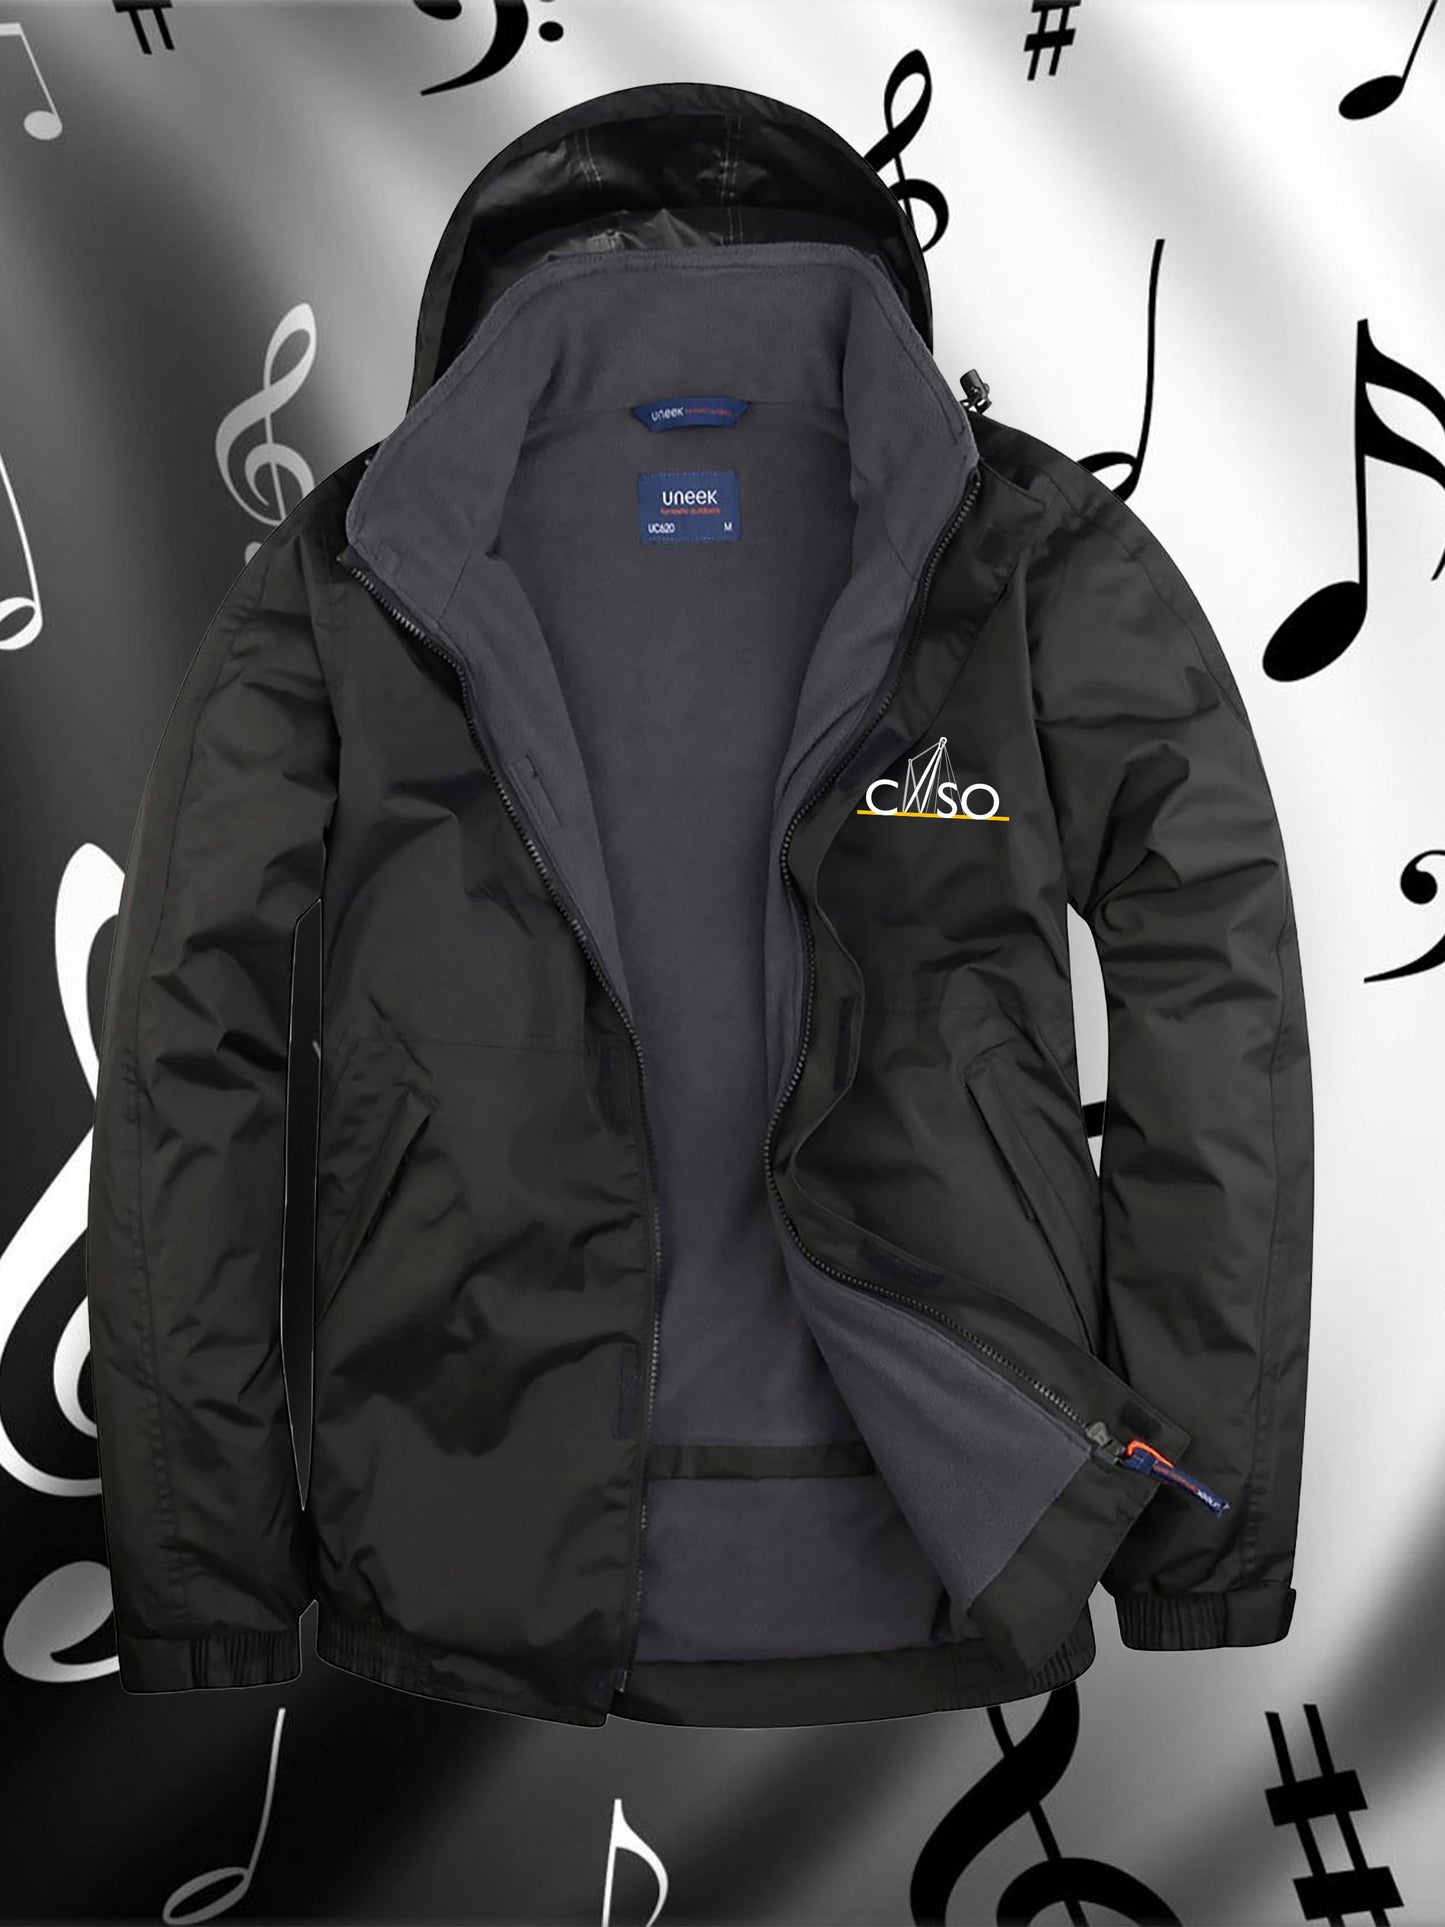 CNSO -UC620 Premium Outdoor Jacket